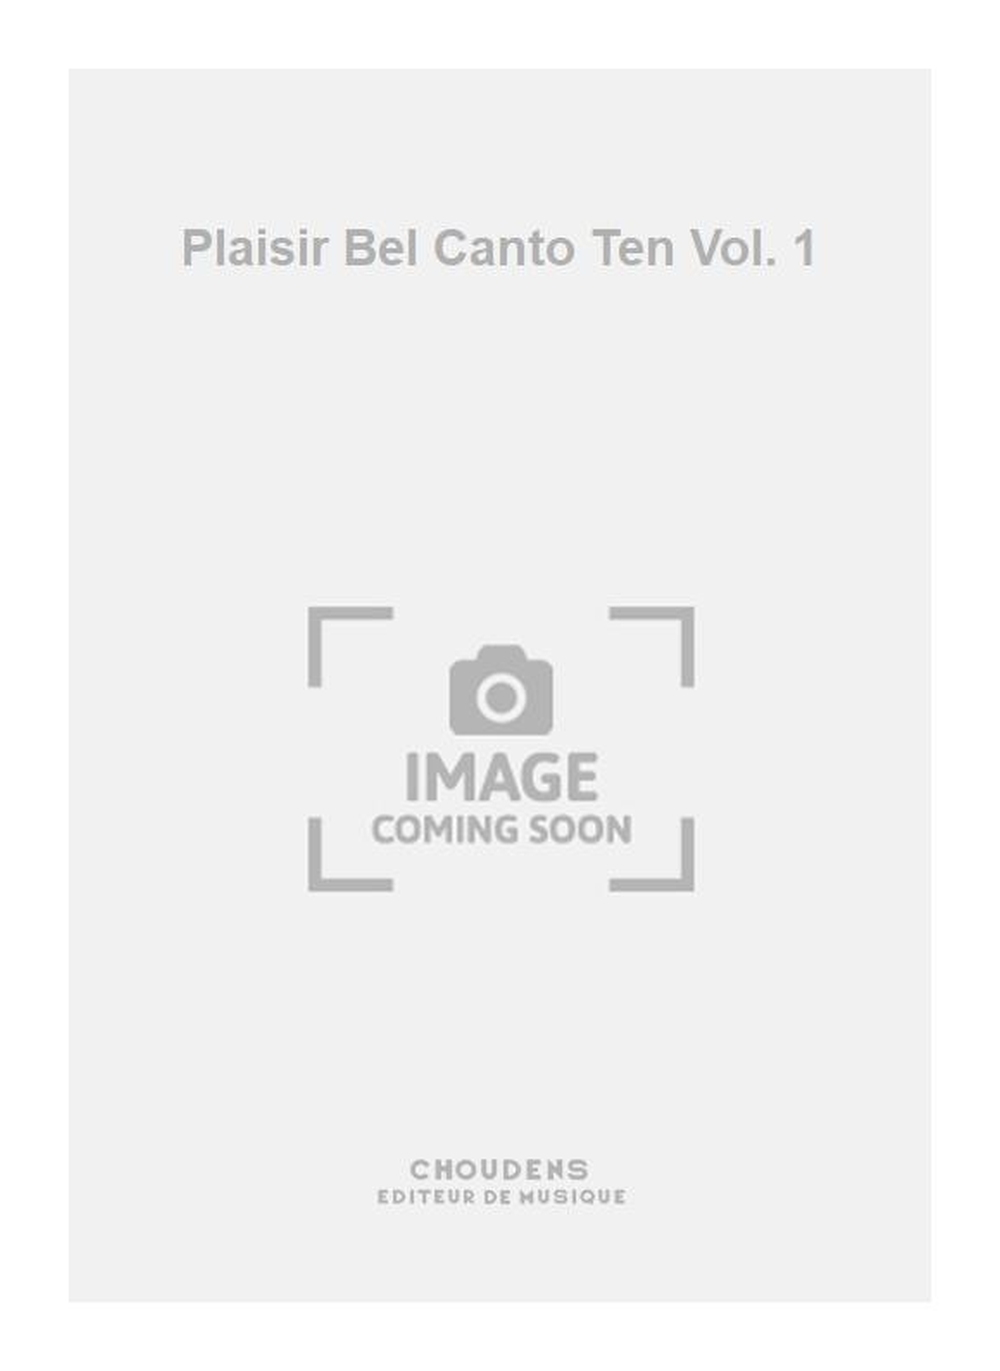 Plaisir Bel Canto Ten Vol. 1